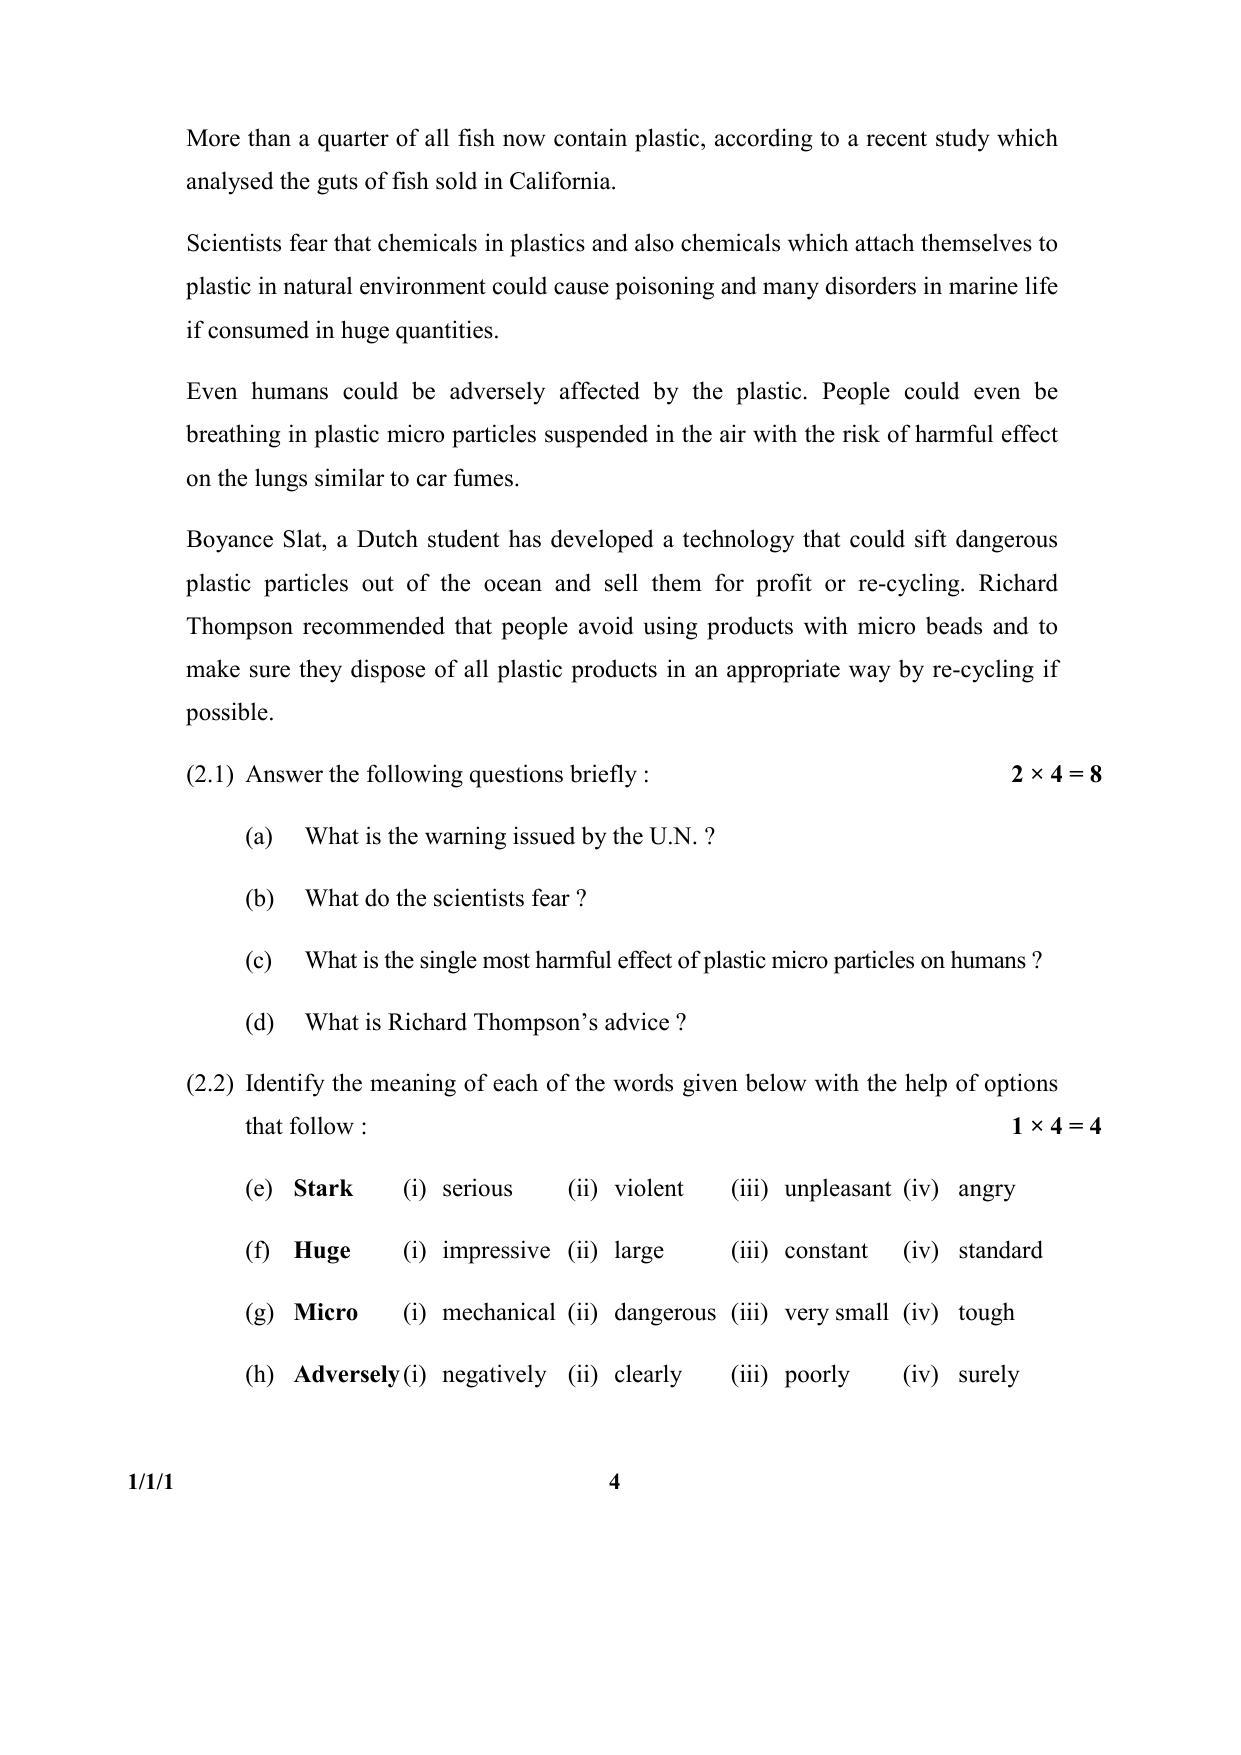 CBSE Class 10 1-1-1 (Eng.) 2017-comptt Question Paper - Page 4